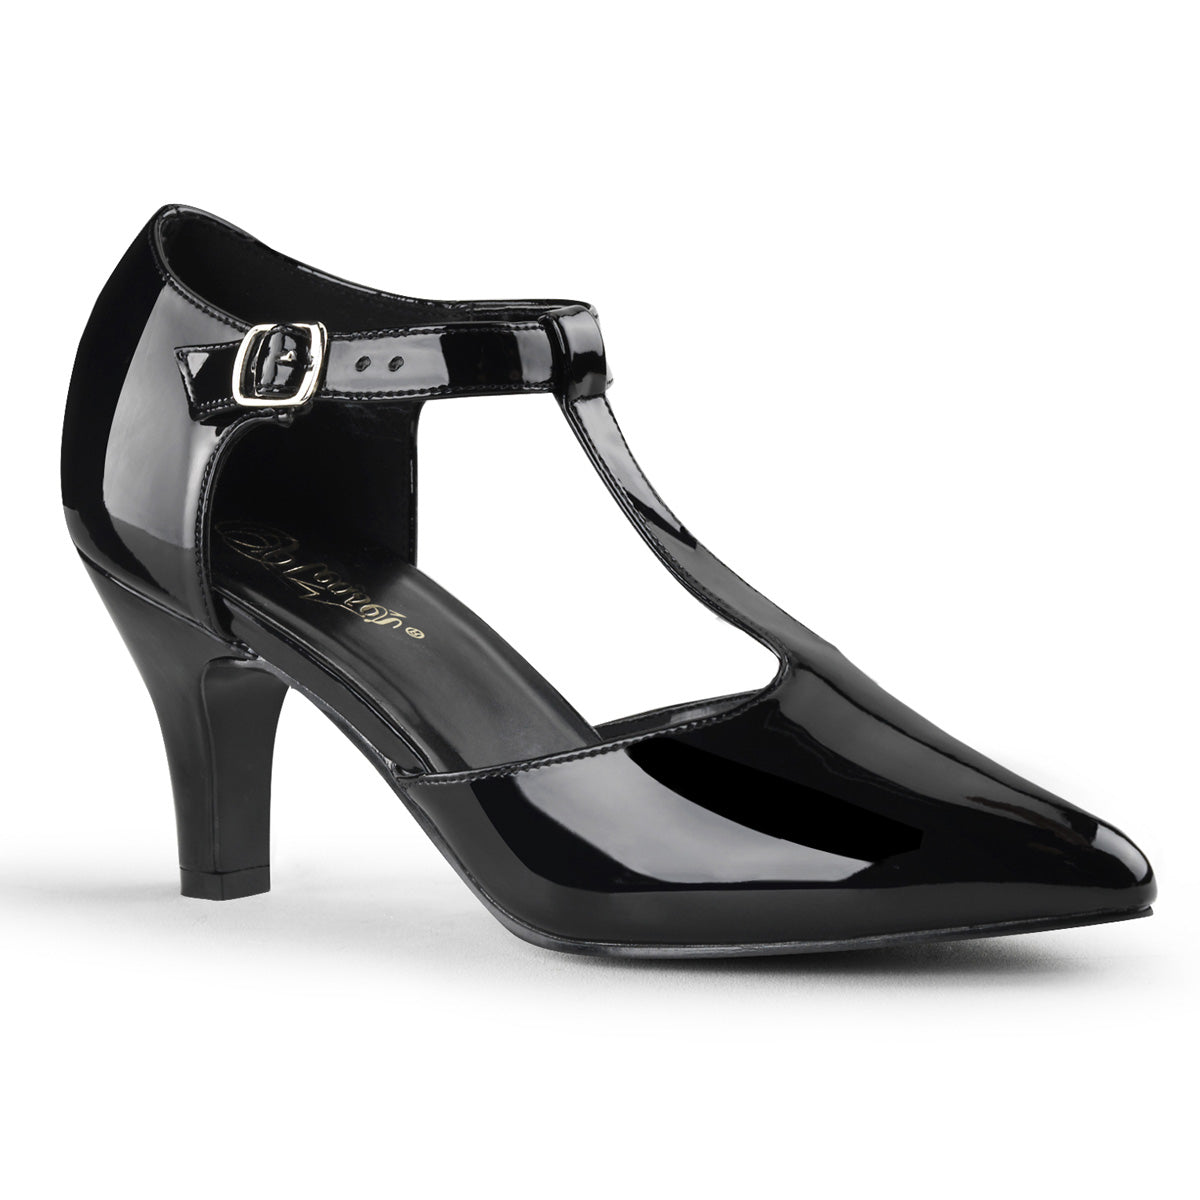 DIVINE-415 Large Size Ladies Shoes 3" Heel Black Patent Fetish Footwear